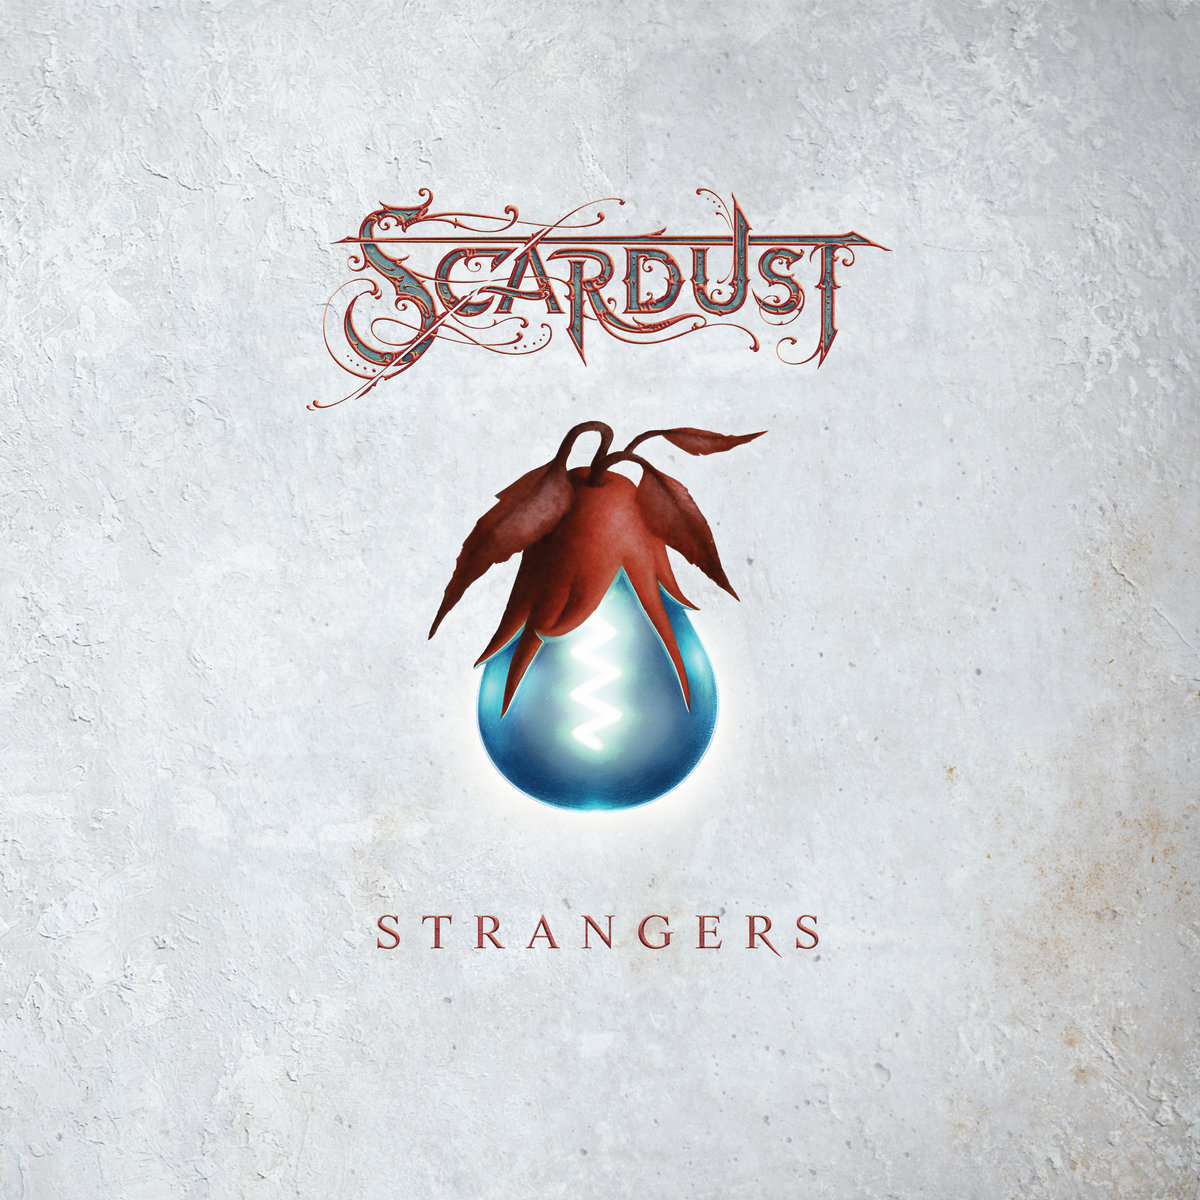 Review: Scardust Strangers